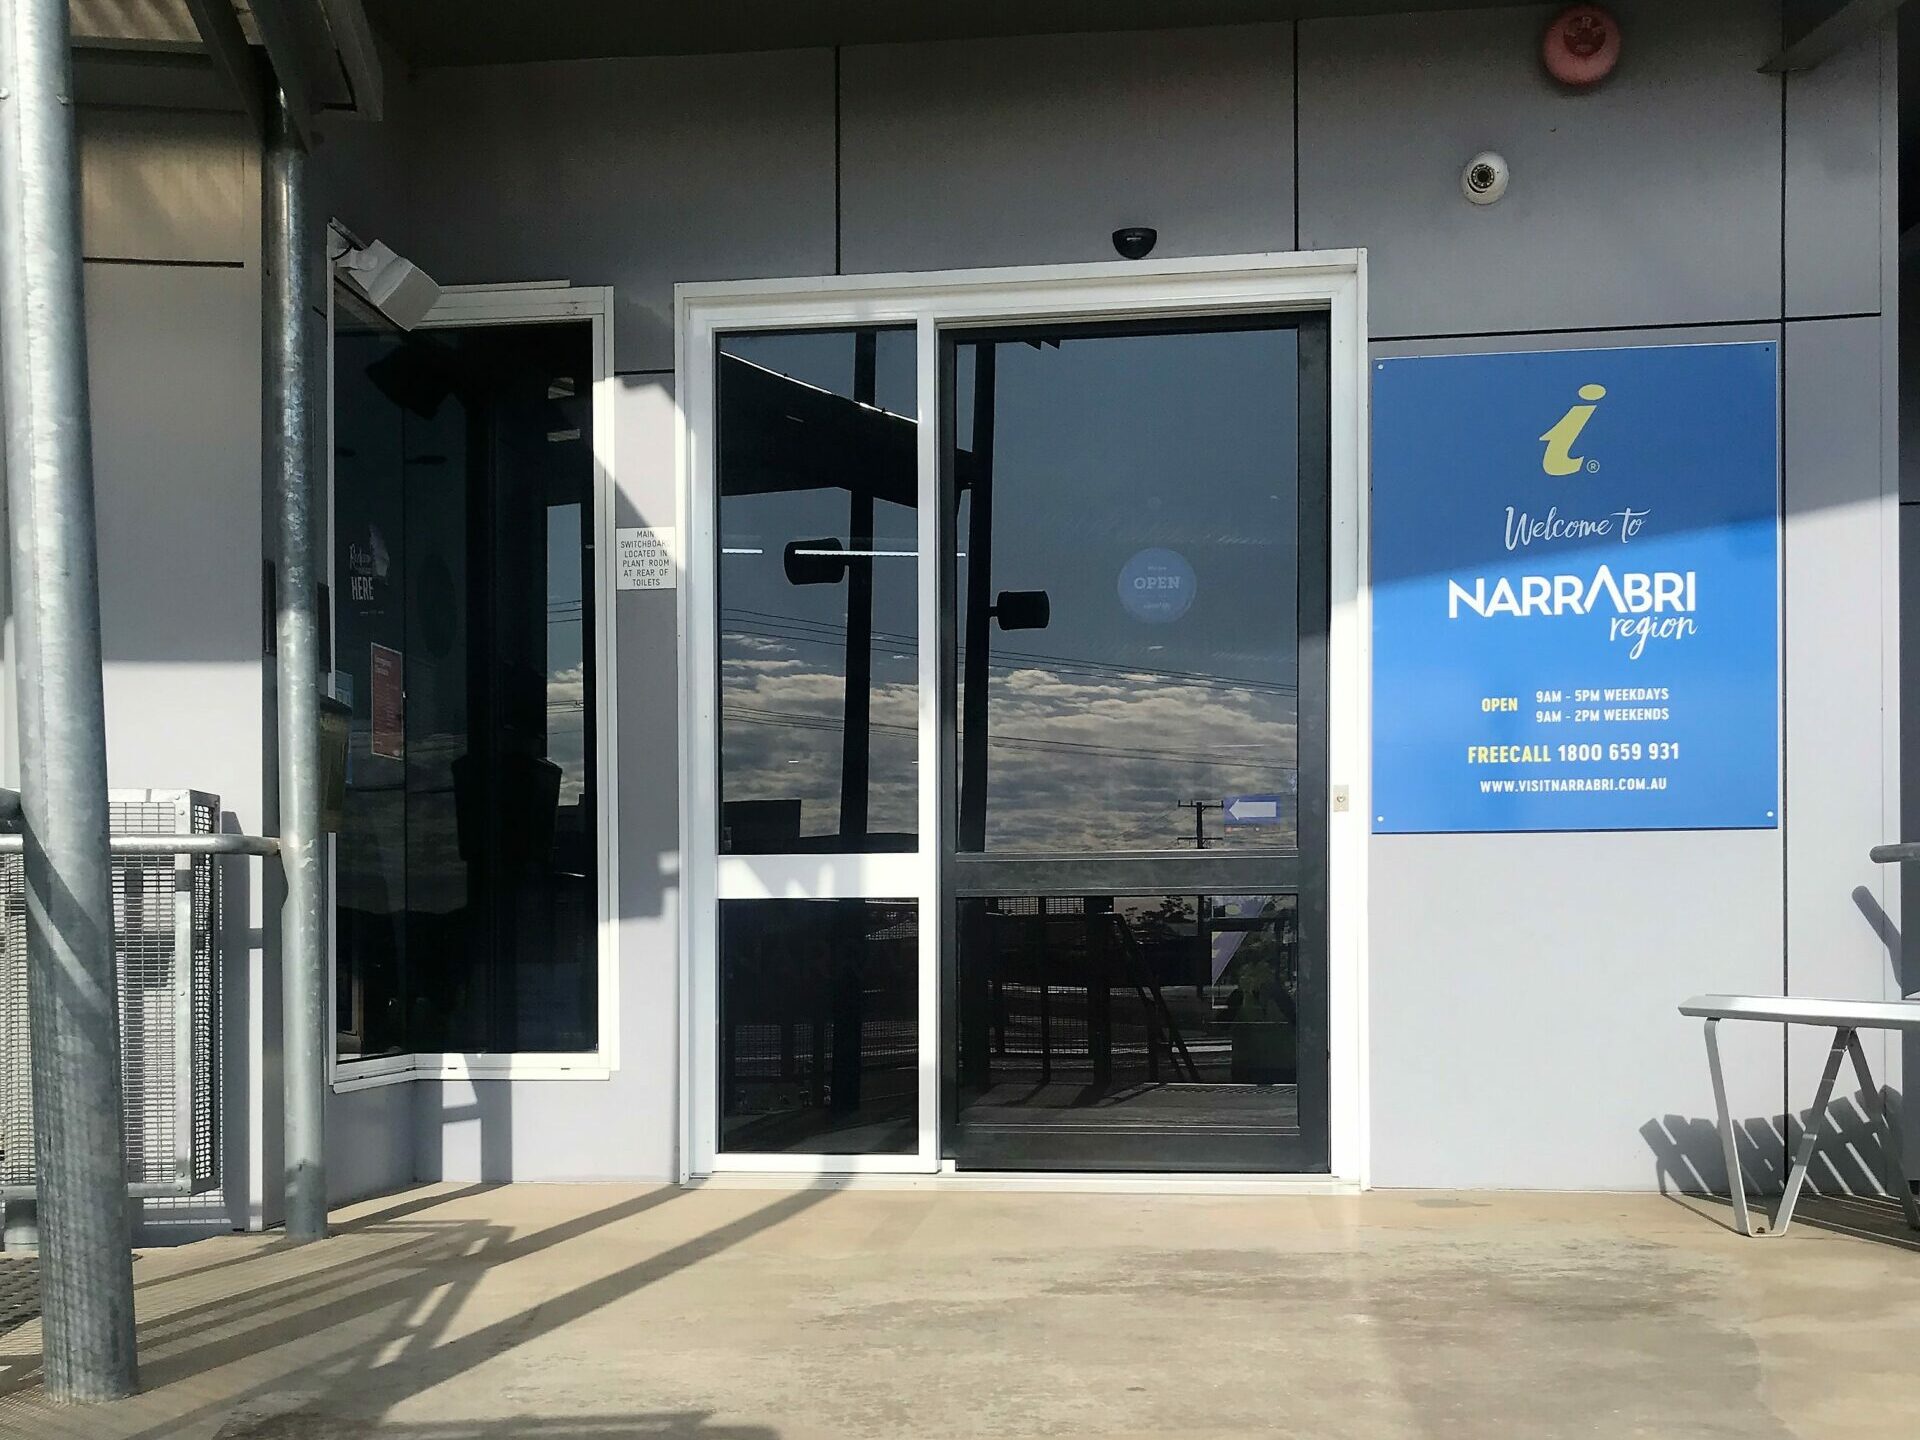 Automatic doors installed at Narrabri Shire Council facilities